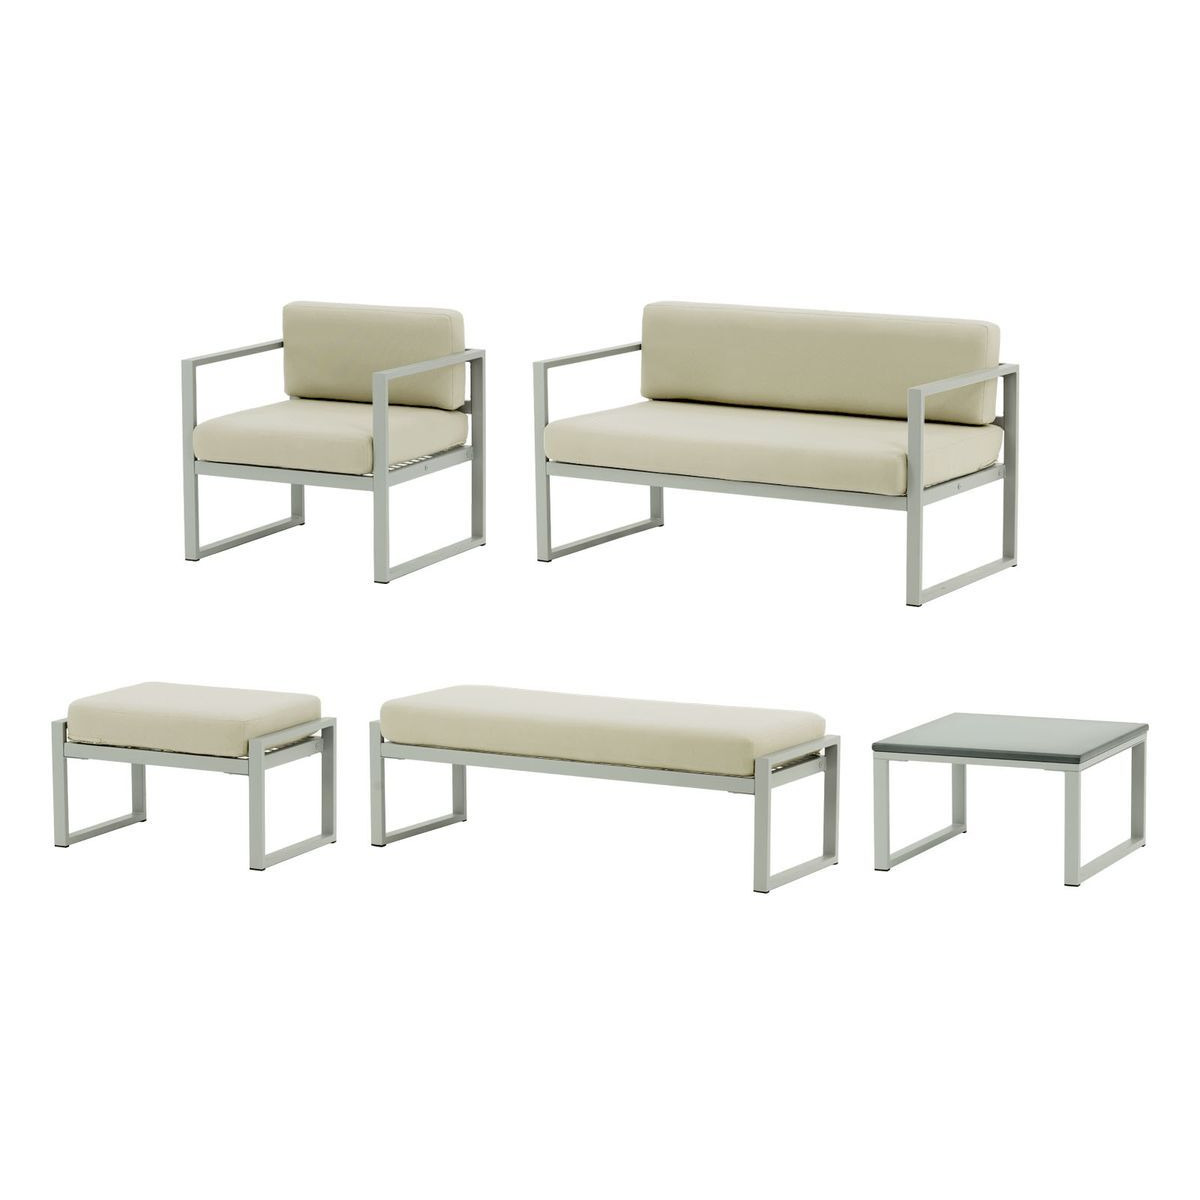 Sunset 5-piece garden furniture set A, cream, Leg colour: grey steel